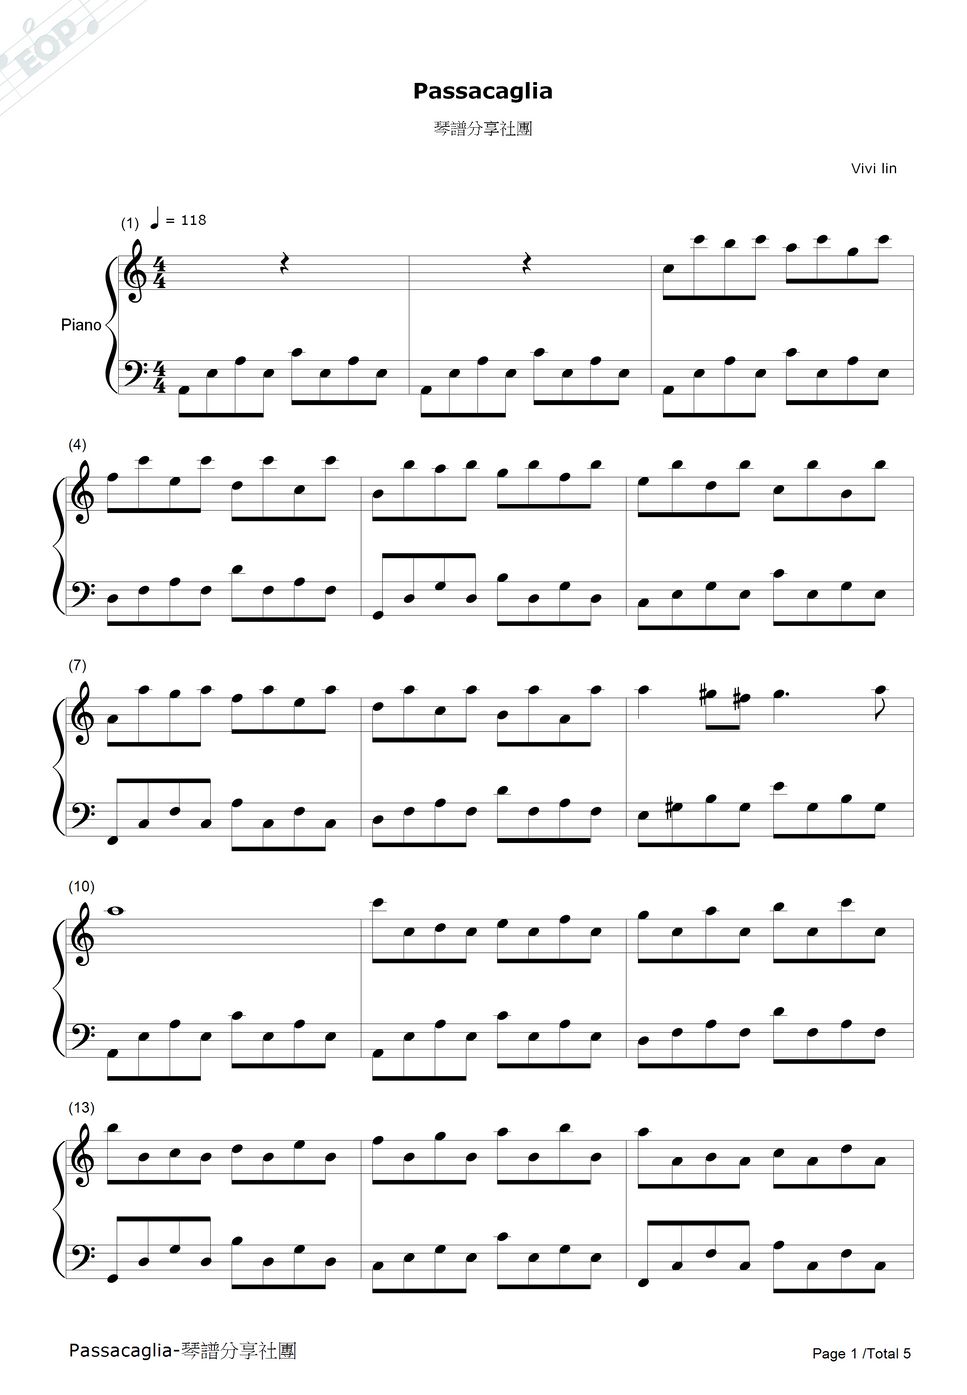 G. F. Handel - Passacaglia帕薩卡利亞舞曲，C大調，五線譜+簡譜 by Vivi Lin